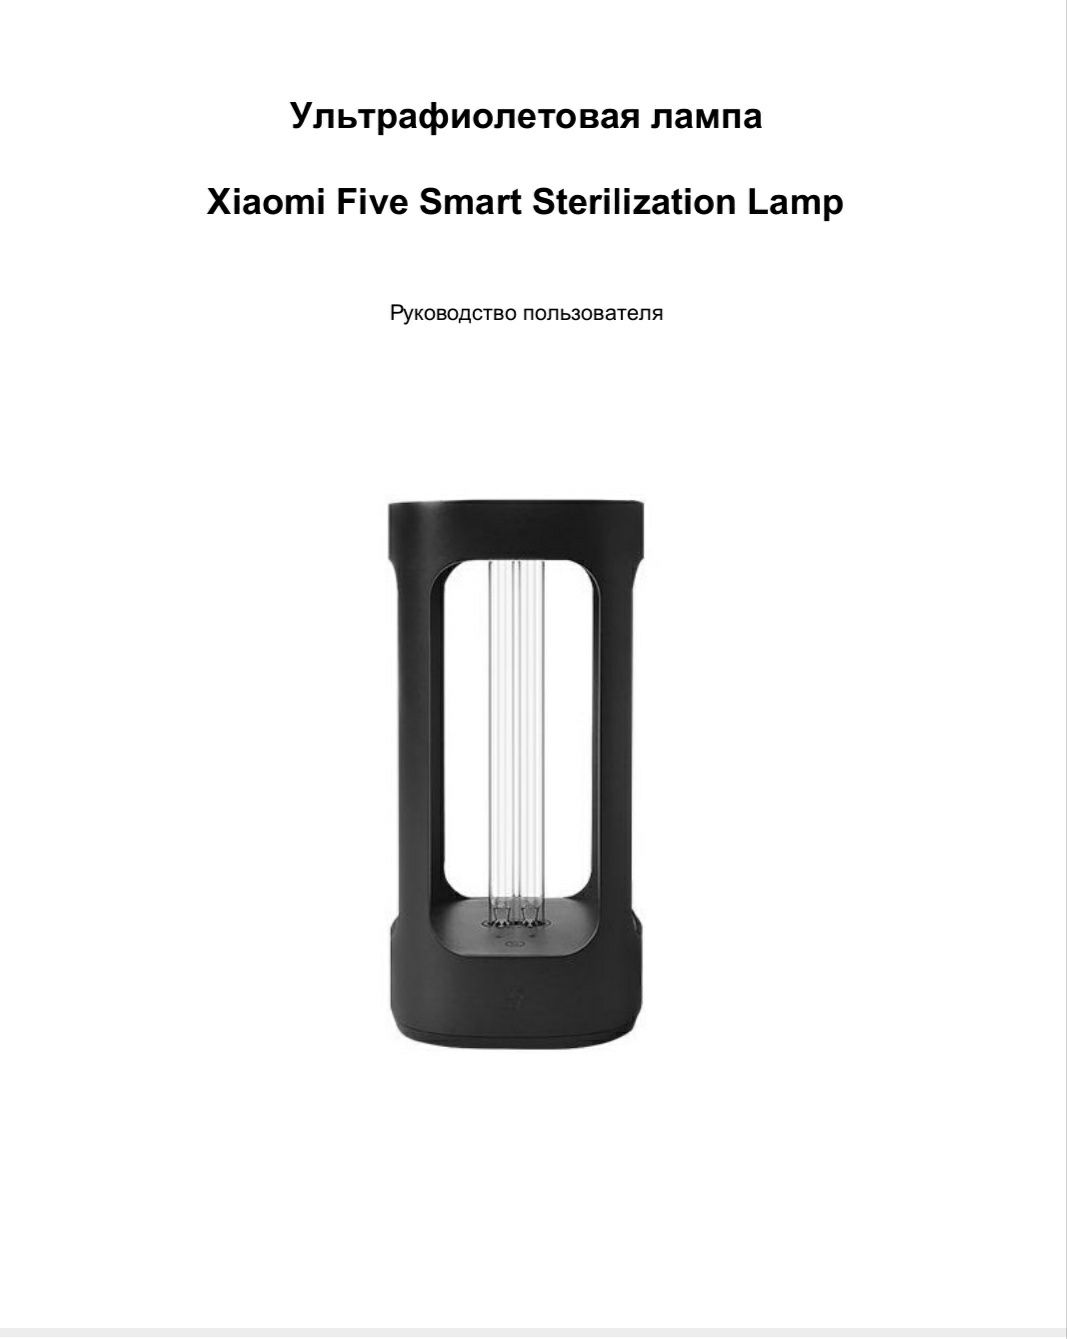 Mikroblarga qarshi chiroq Xiaomi Five Smart Sterilization Lamp